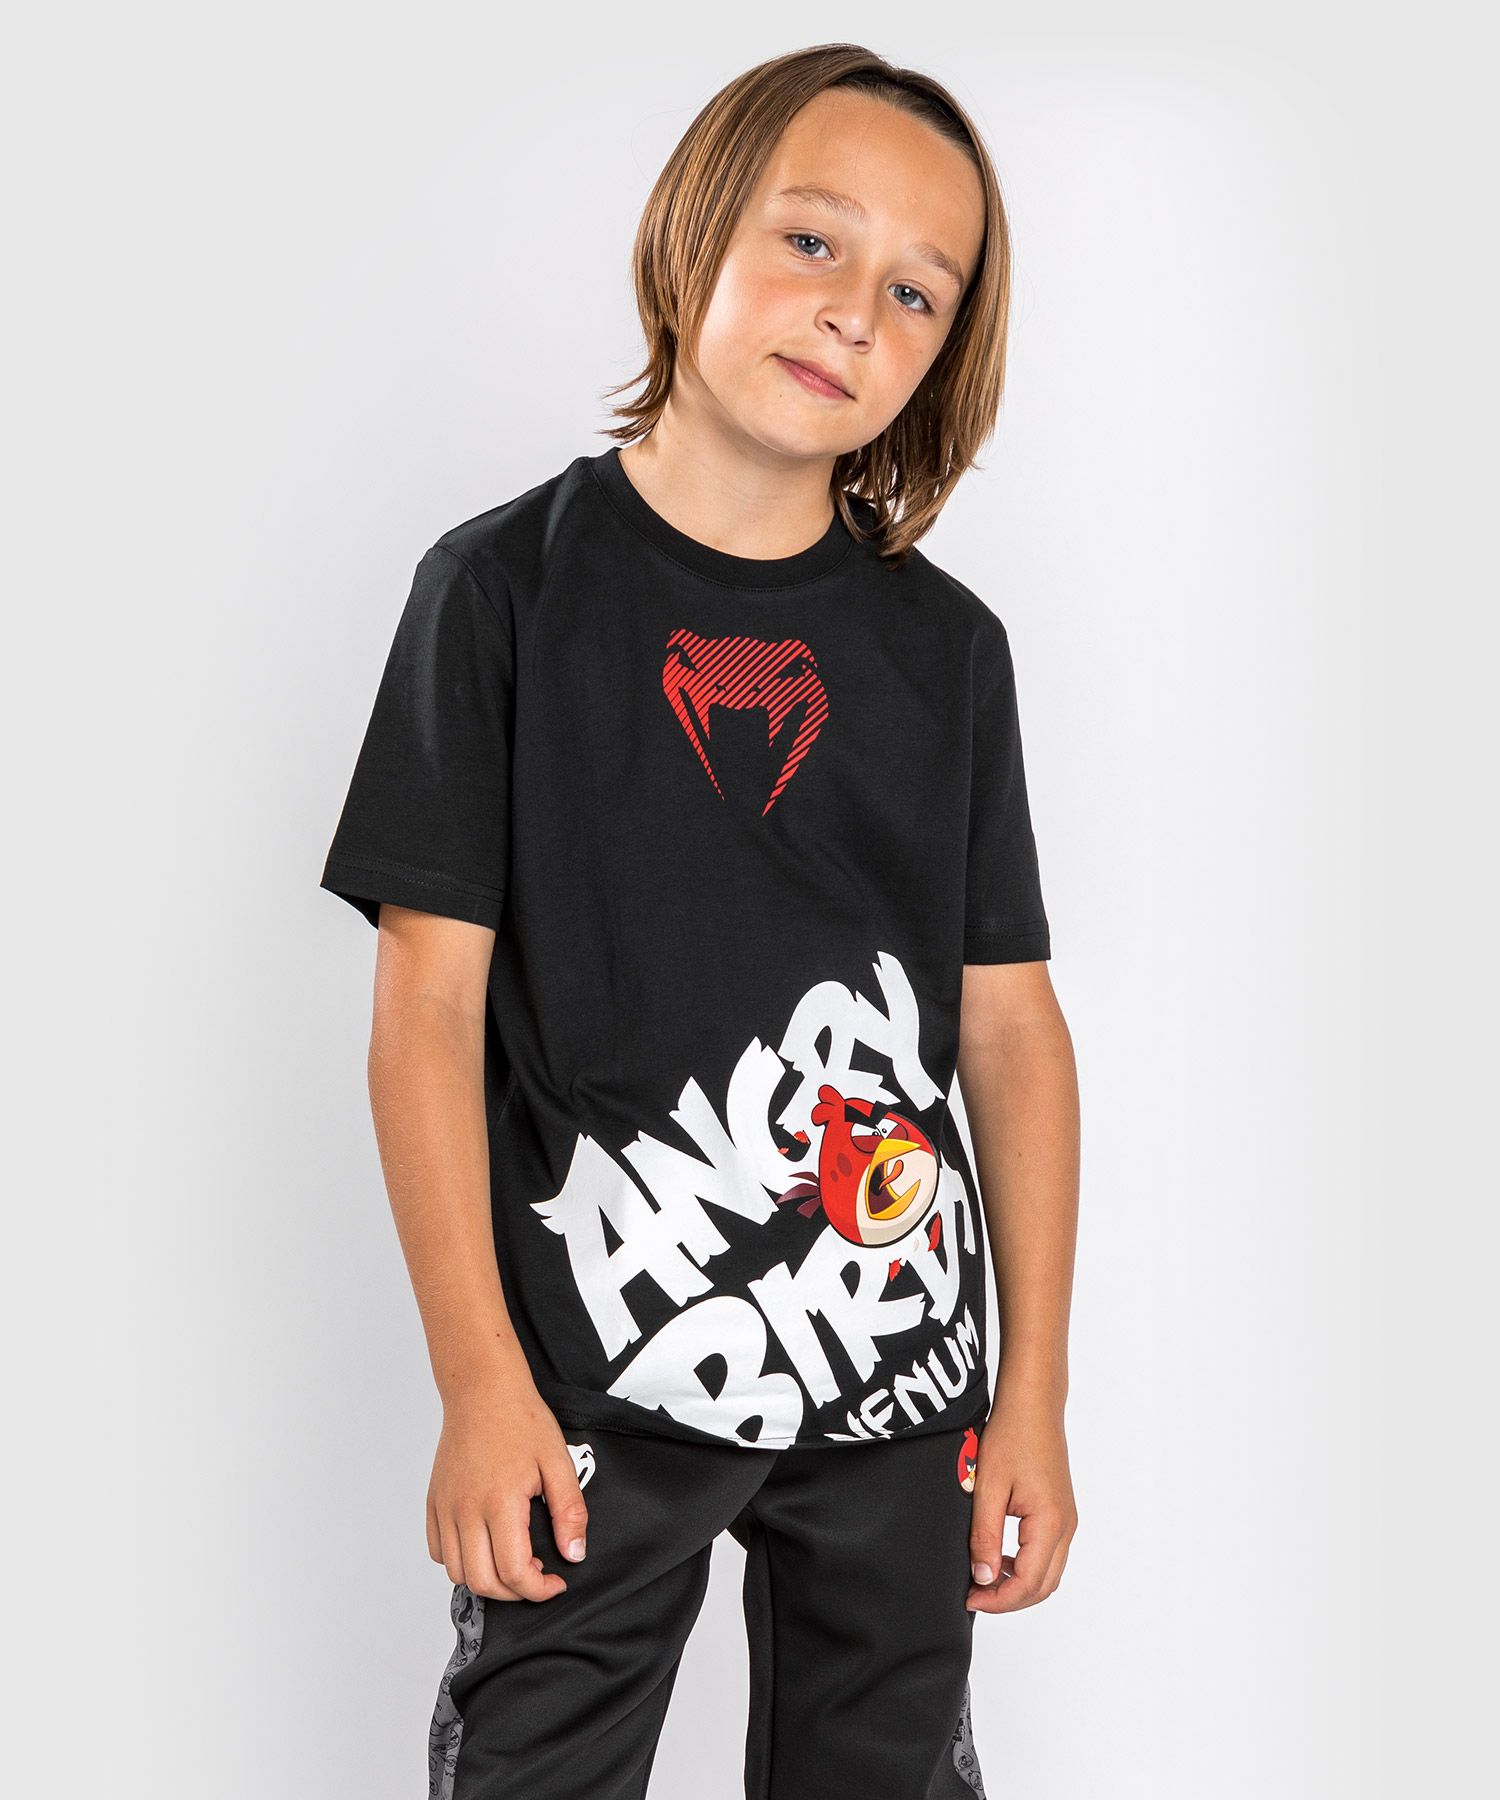 Angry Birds x Venum T-Shirt - Kinder